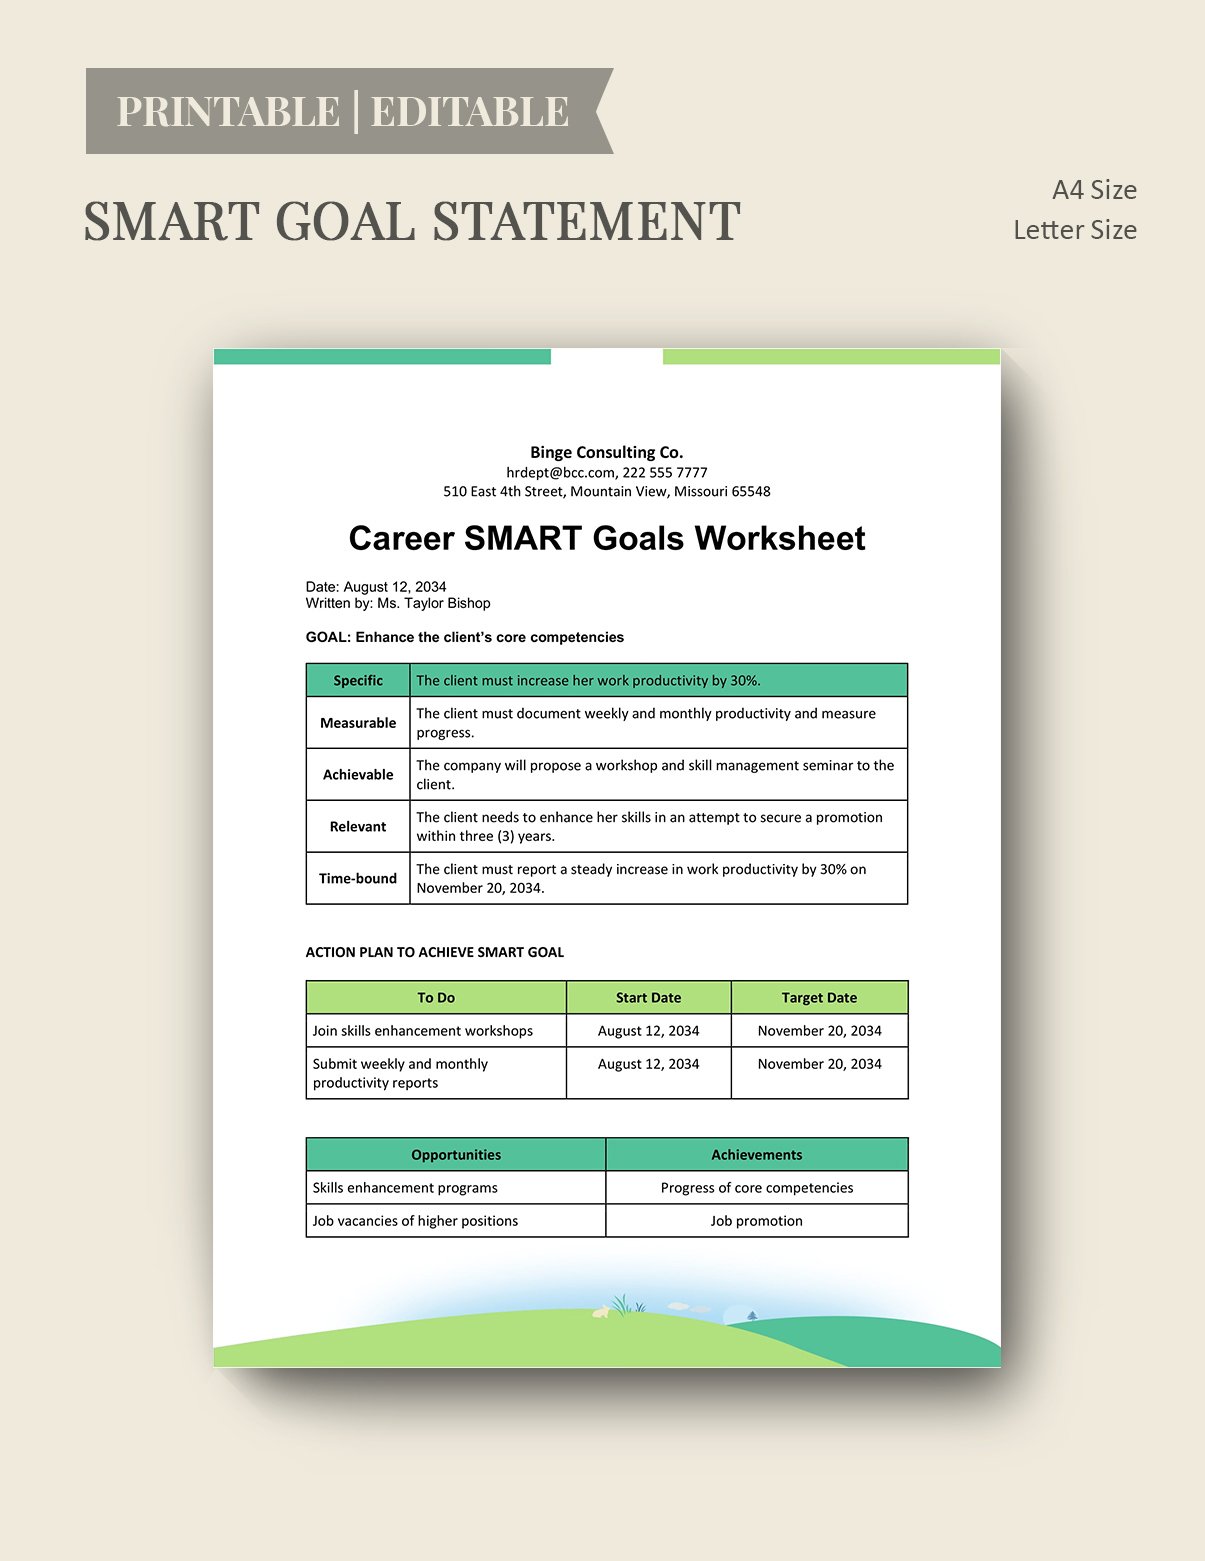 Career Smart Goals Worksheet Template